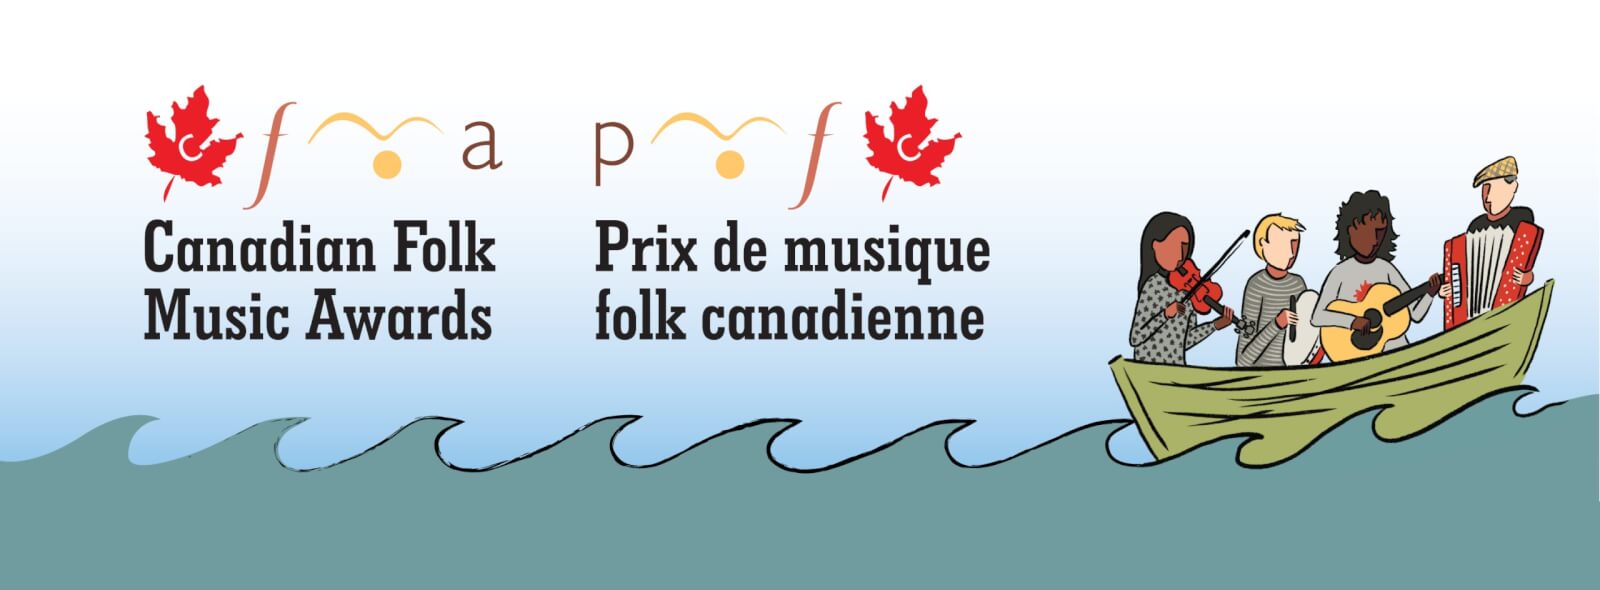 Canadian Folk Music Awards / Prix de musique folk canadienne